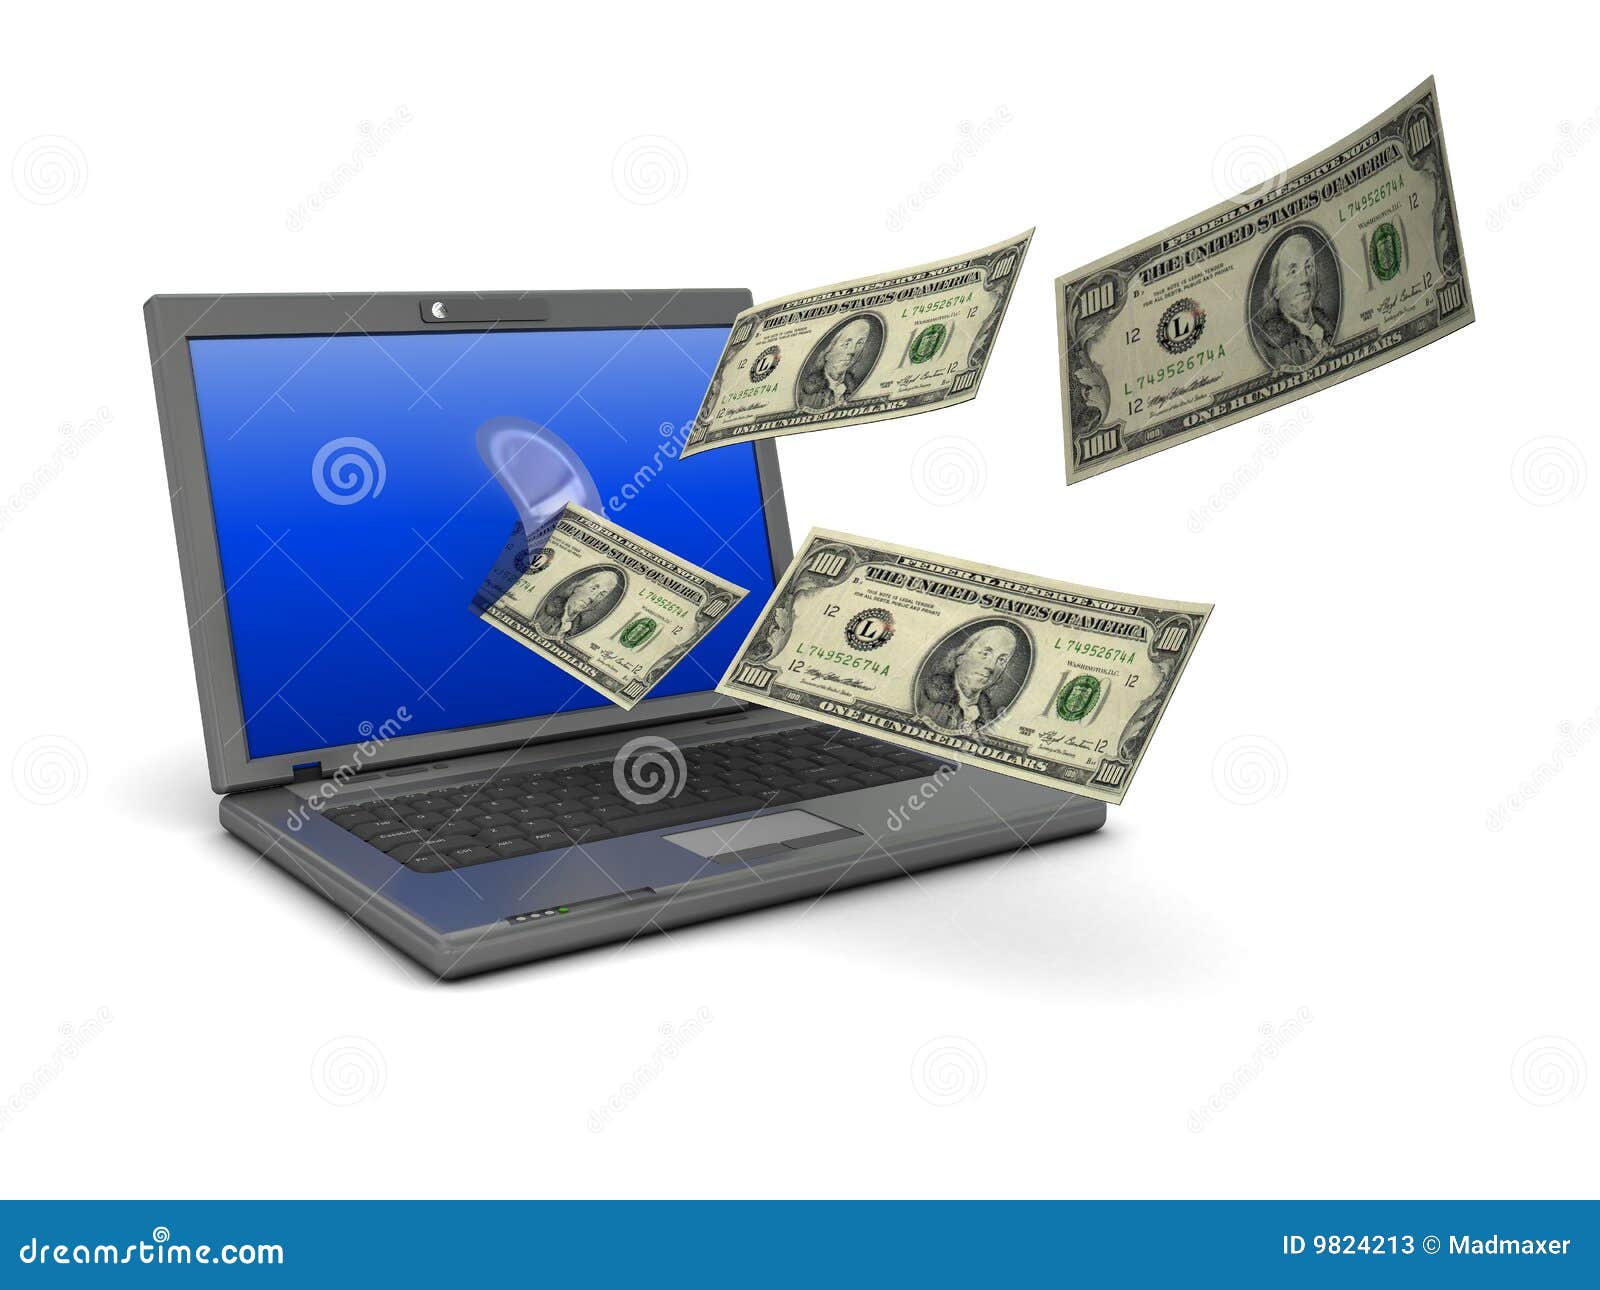 Laptop With Money Stock Photos - Image: 9824213